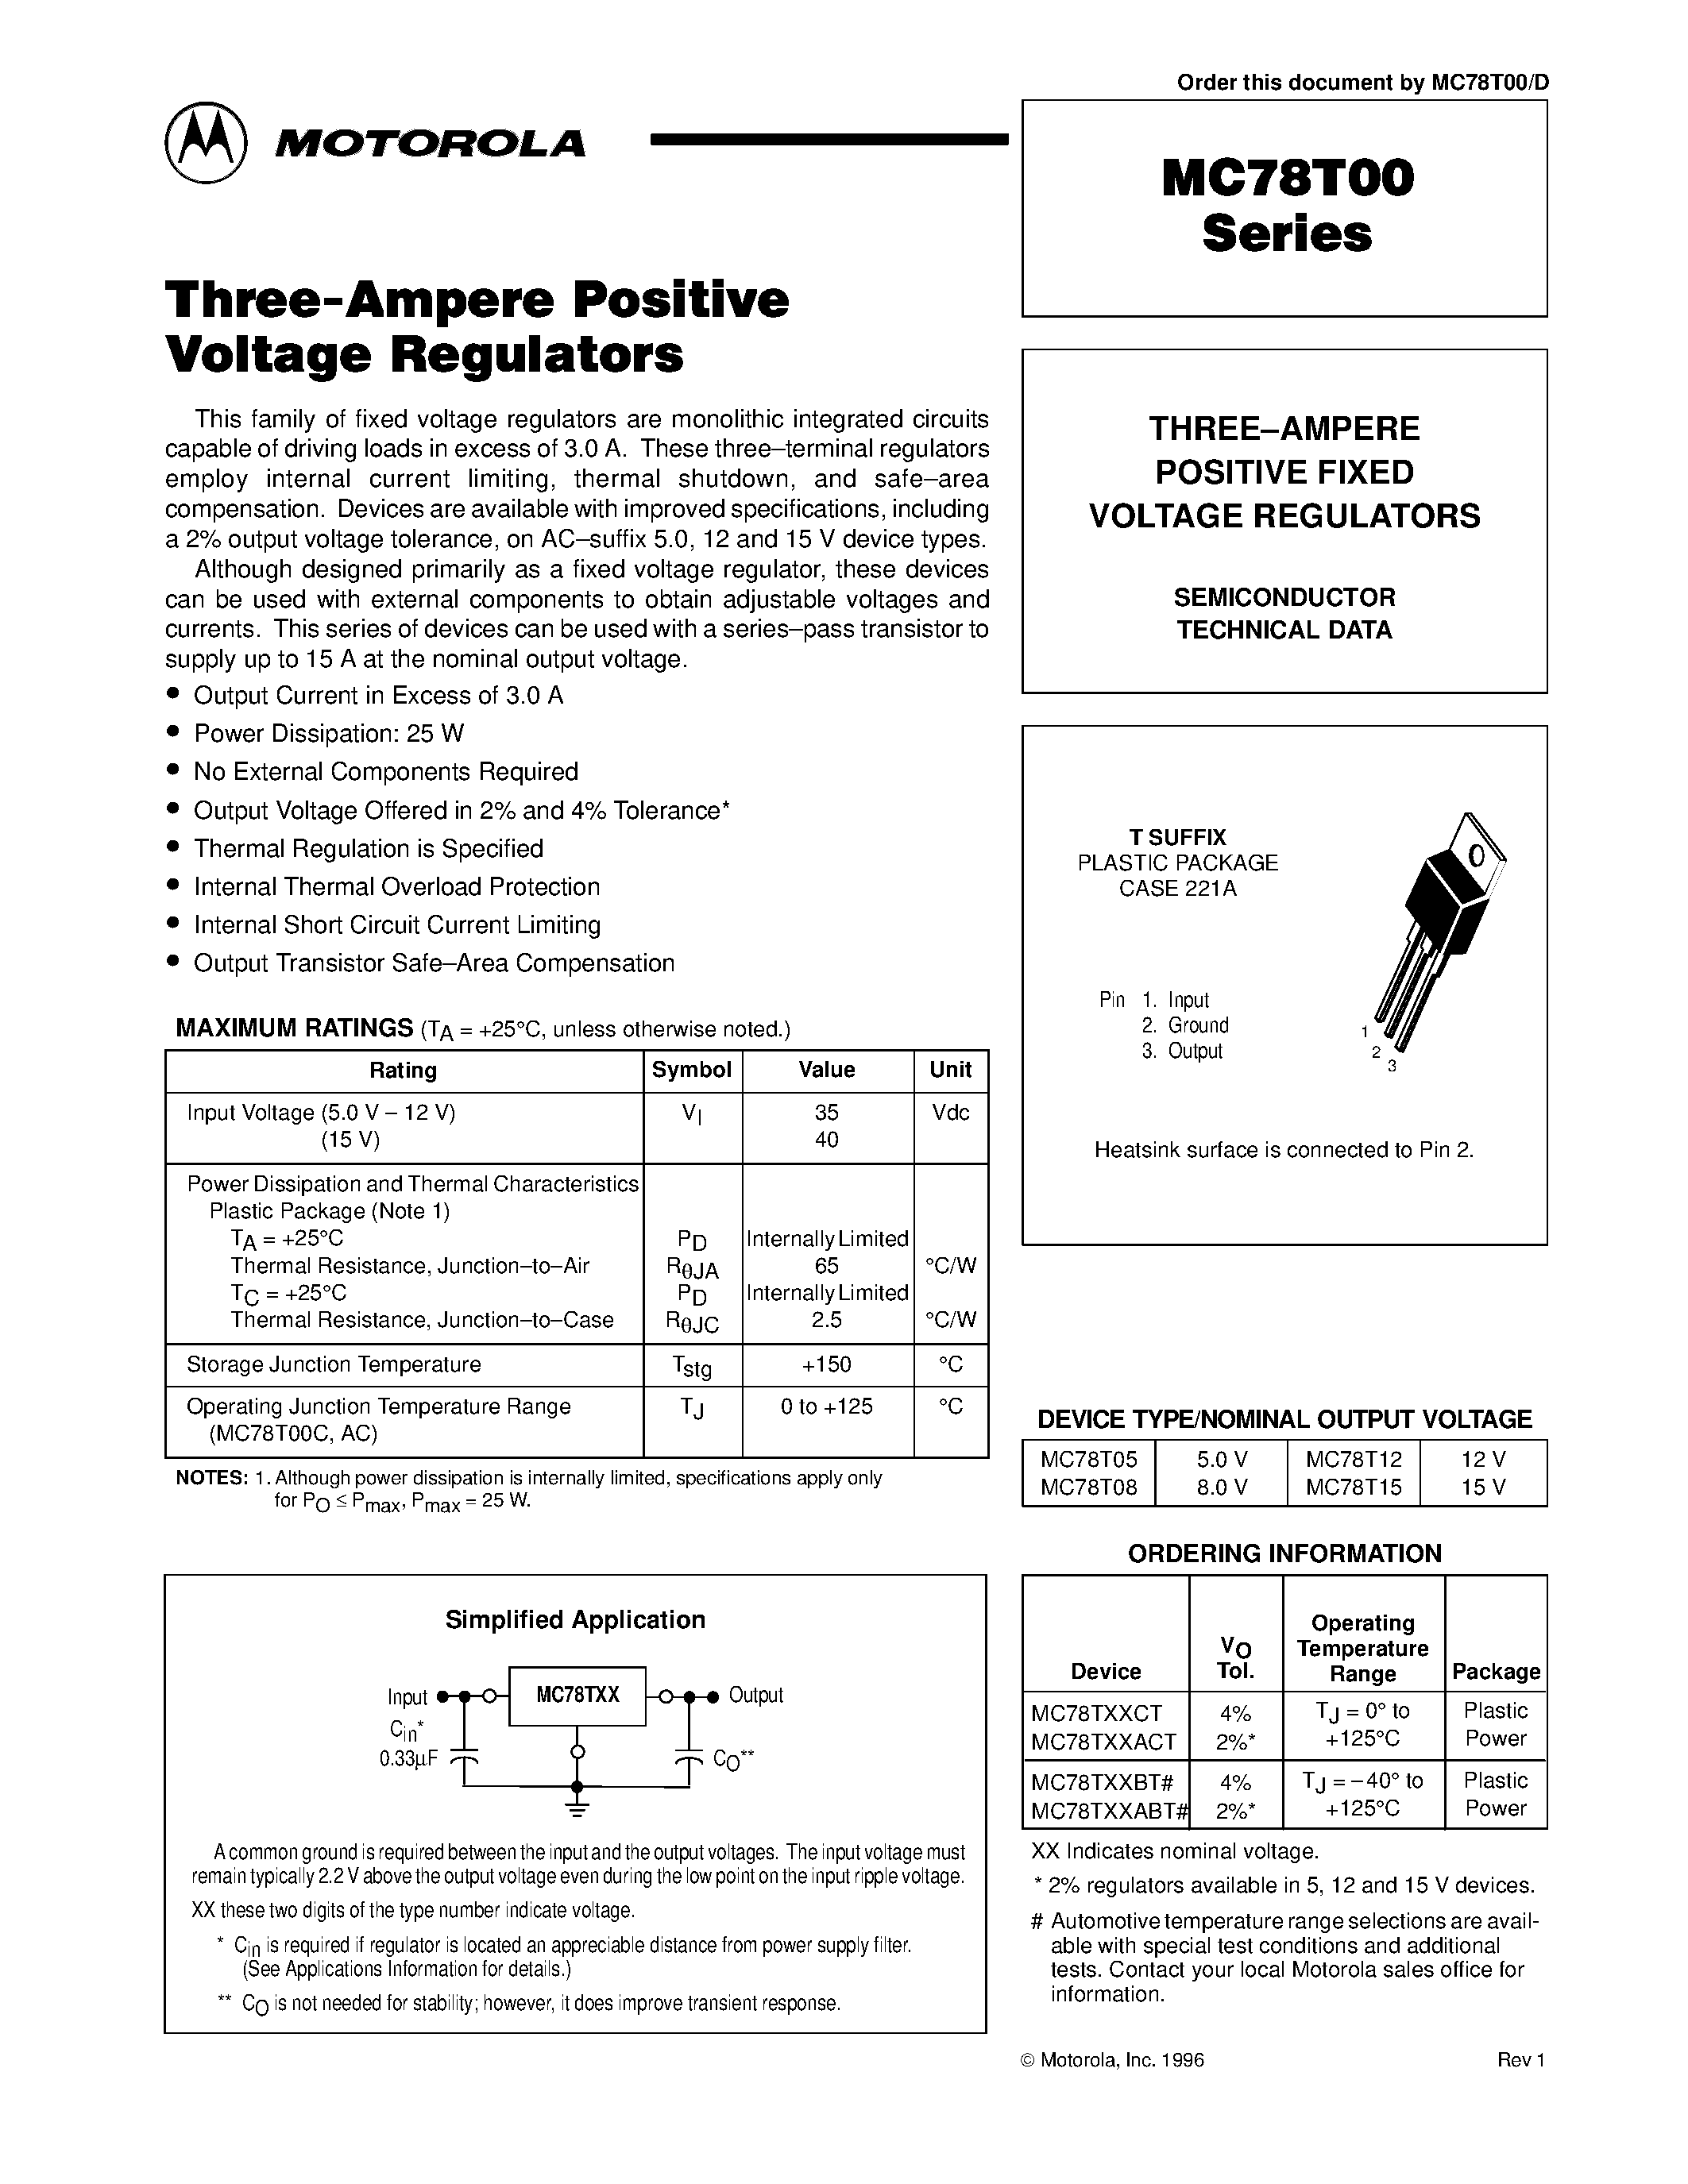 Даташит MC78T05CD2TR4 - THREE-AMPERE POSITIVE FIXED VOLTAGE REGULATORS страница 1